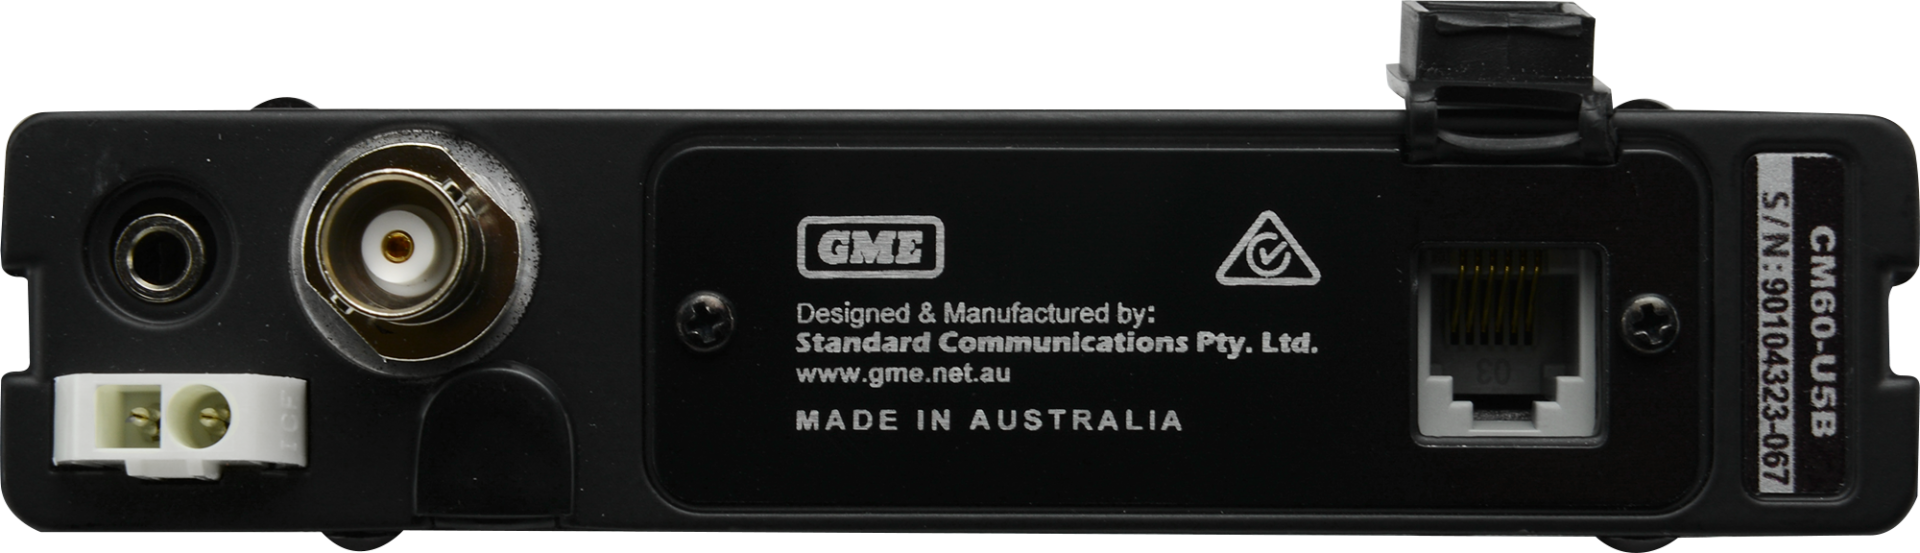 Geheugen terugbetaling gids CM60-U5L - 5 watt Mobile Local Control UHF Radio | GME